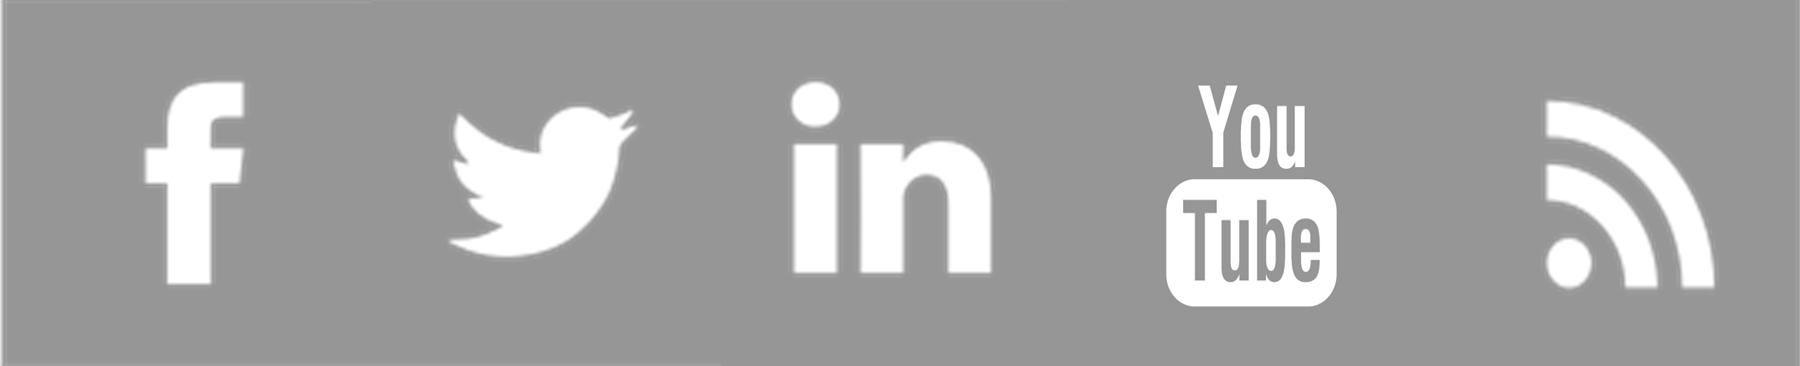 Facebook Twitter LinkedIn Logo - 13 Twitter Facebook LinkedIn Icon Gray Images - Twitter Logo Grey ...